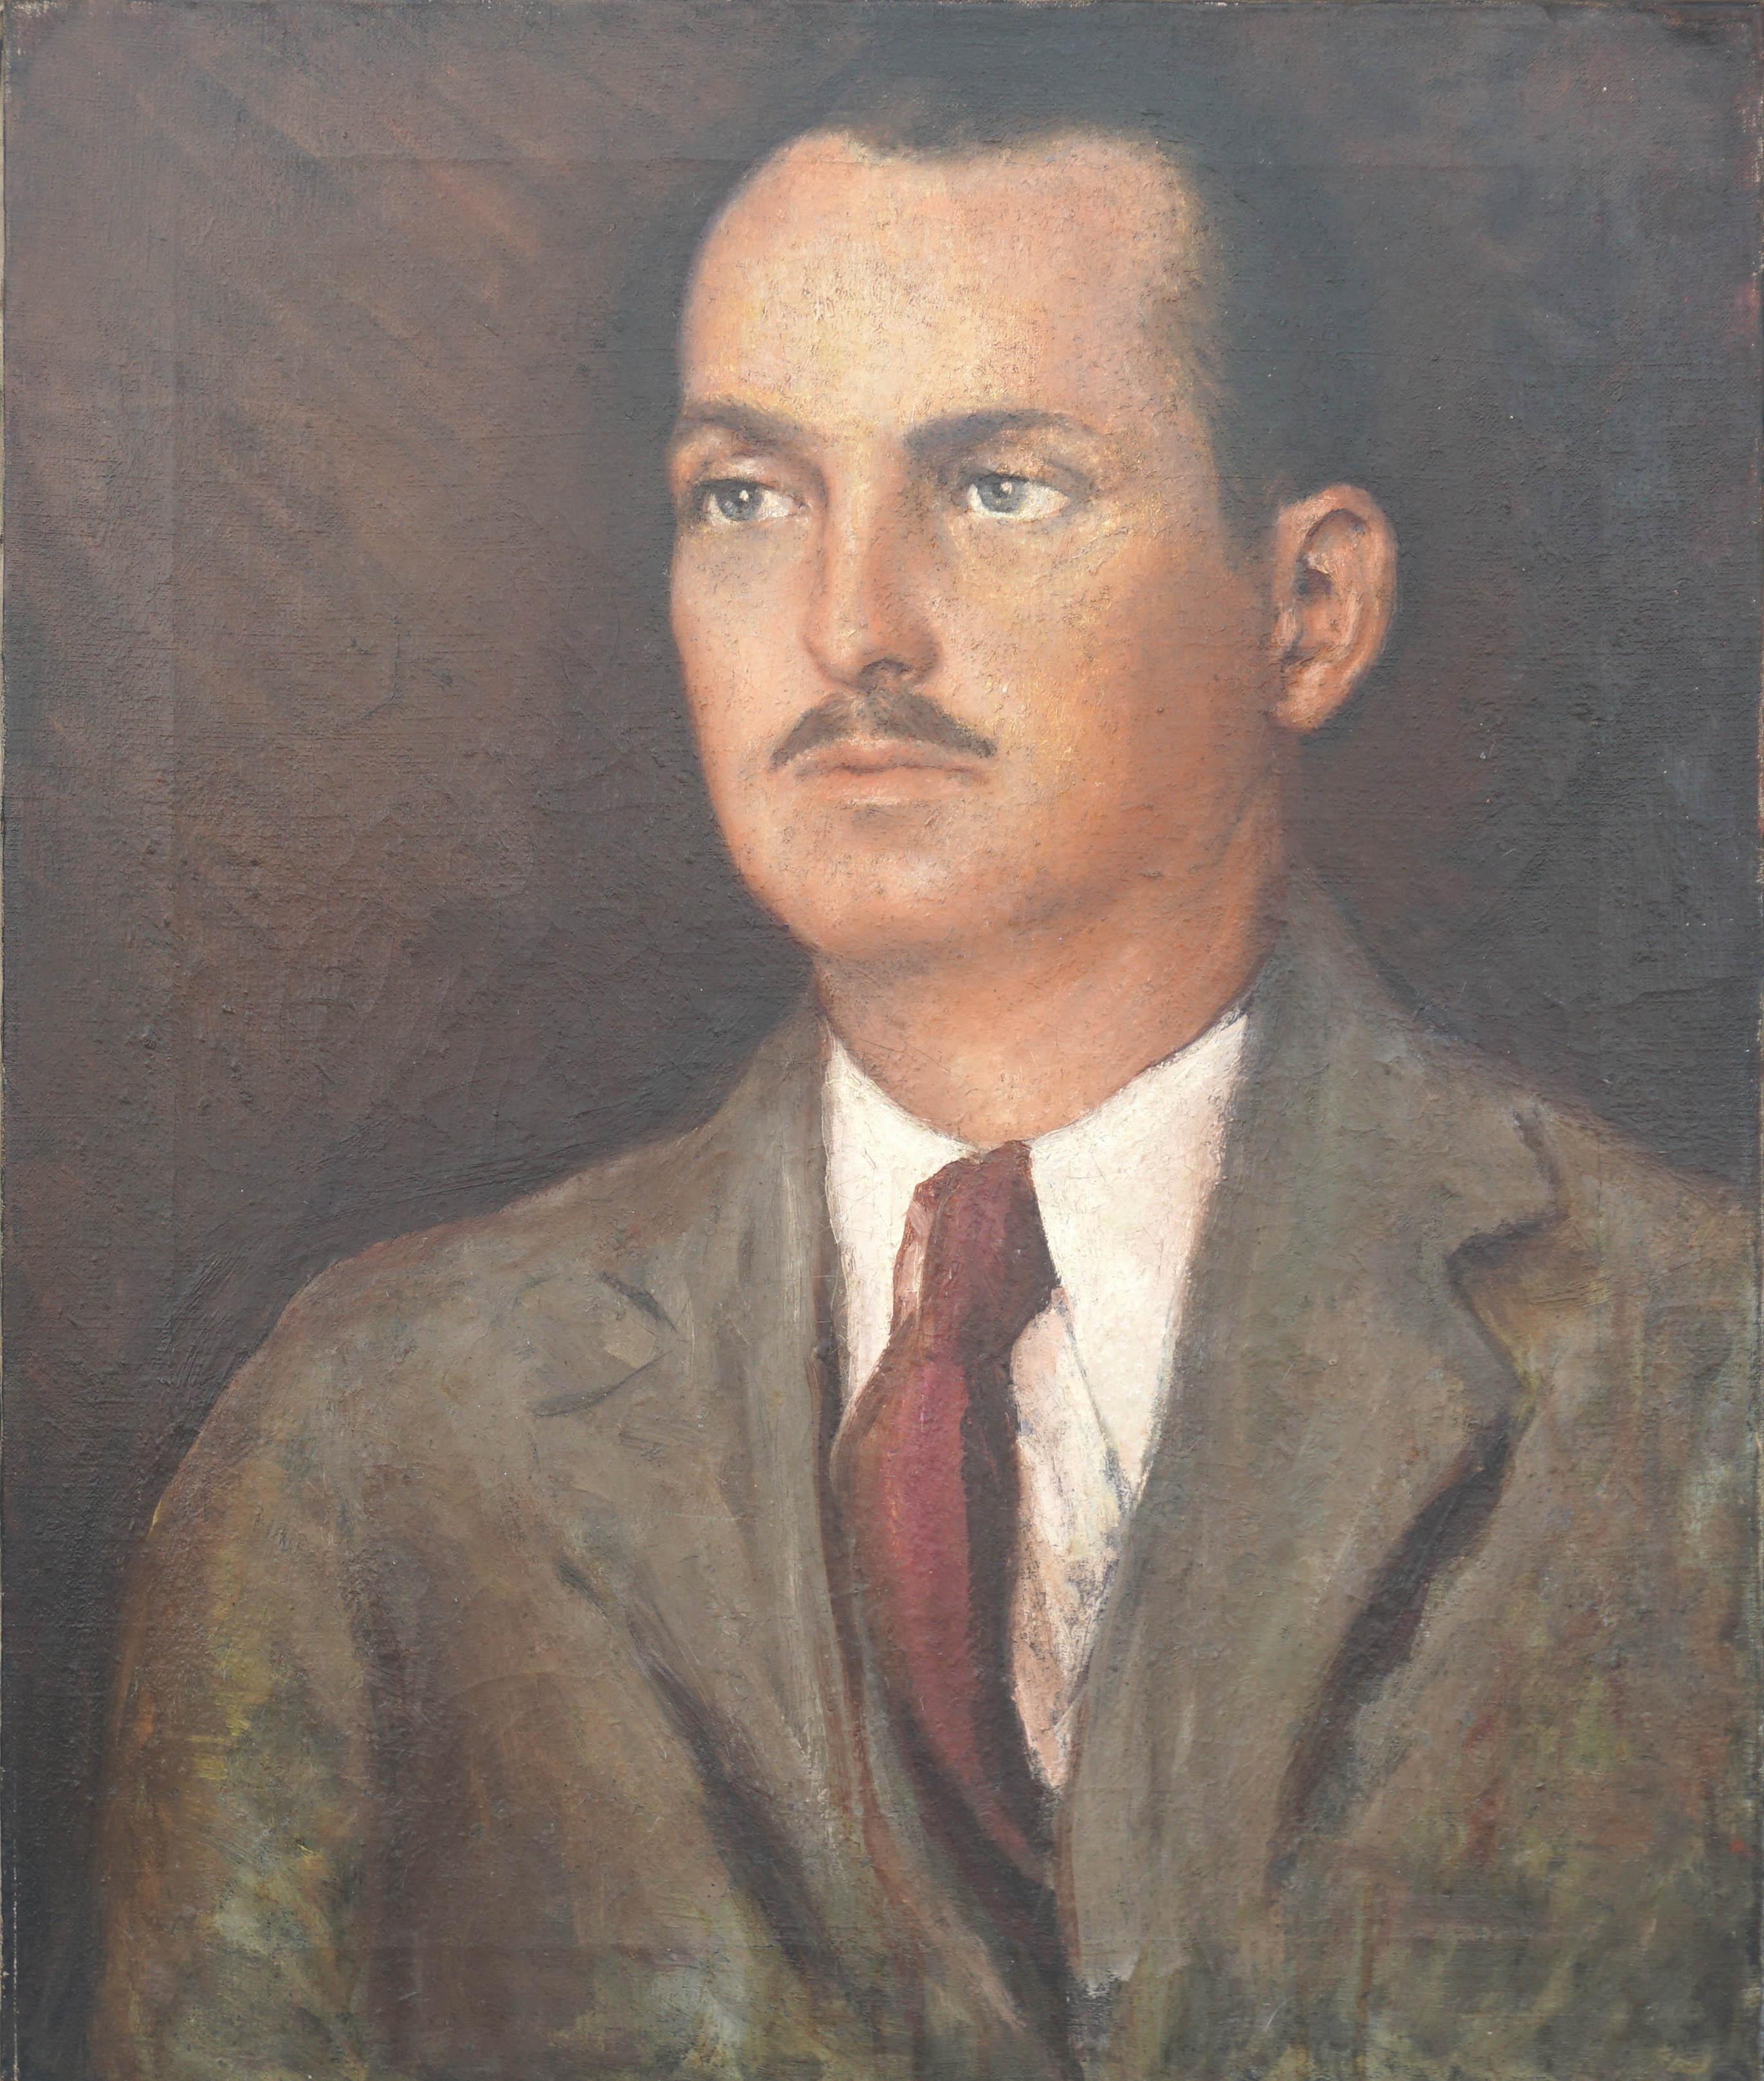 Unknown Portrait Painting - Portrait of Man - likeness of Django Reinhardt